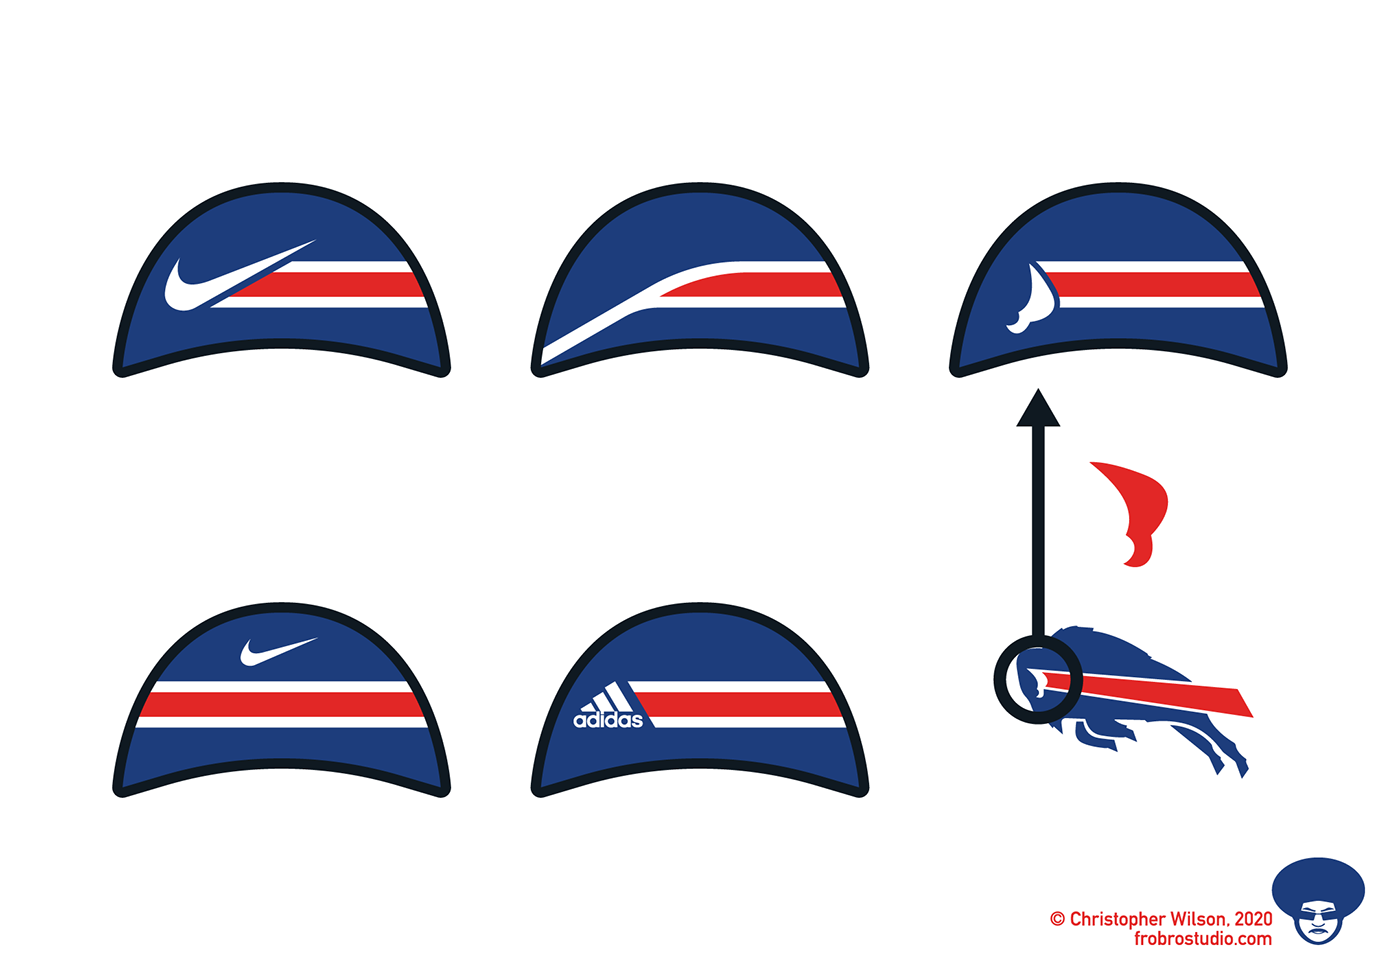 New York Giants alternate Concept - Concepts - Chris Creamer's Sports Logos  Community - CCSLC - SportsLogos.Net Forums